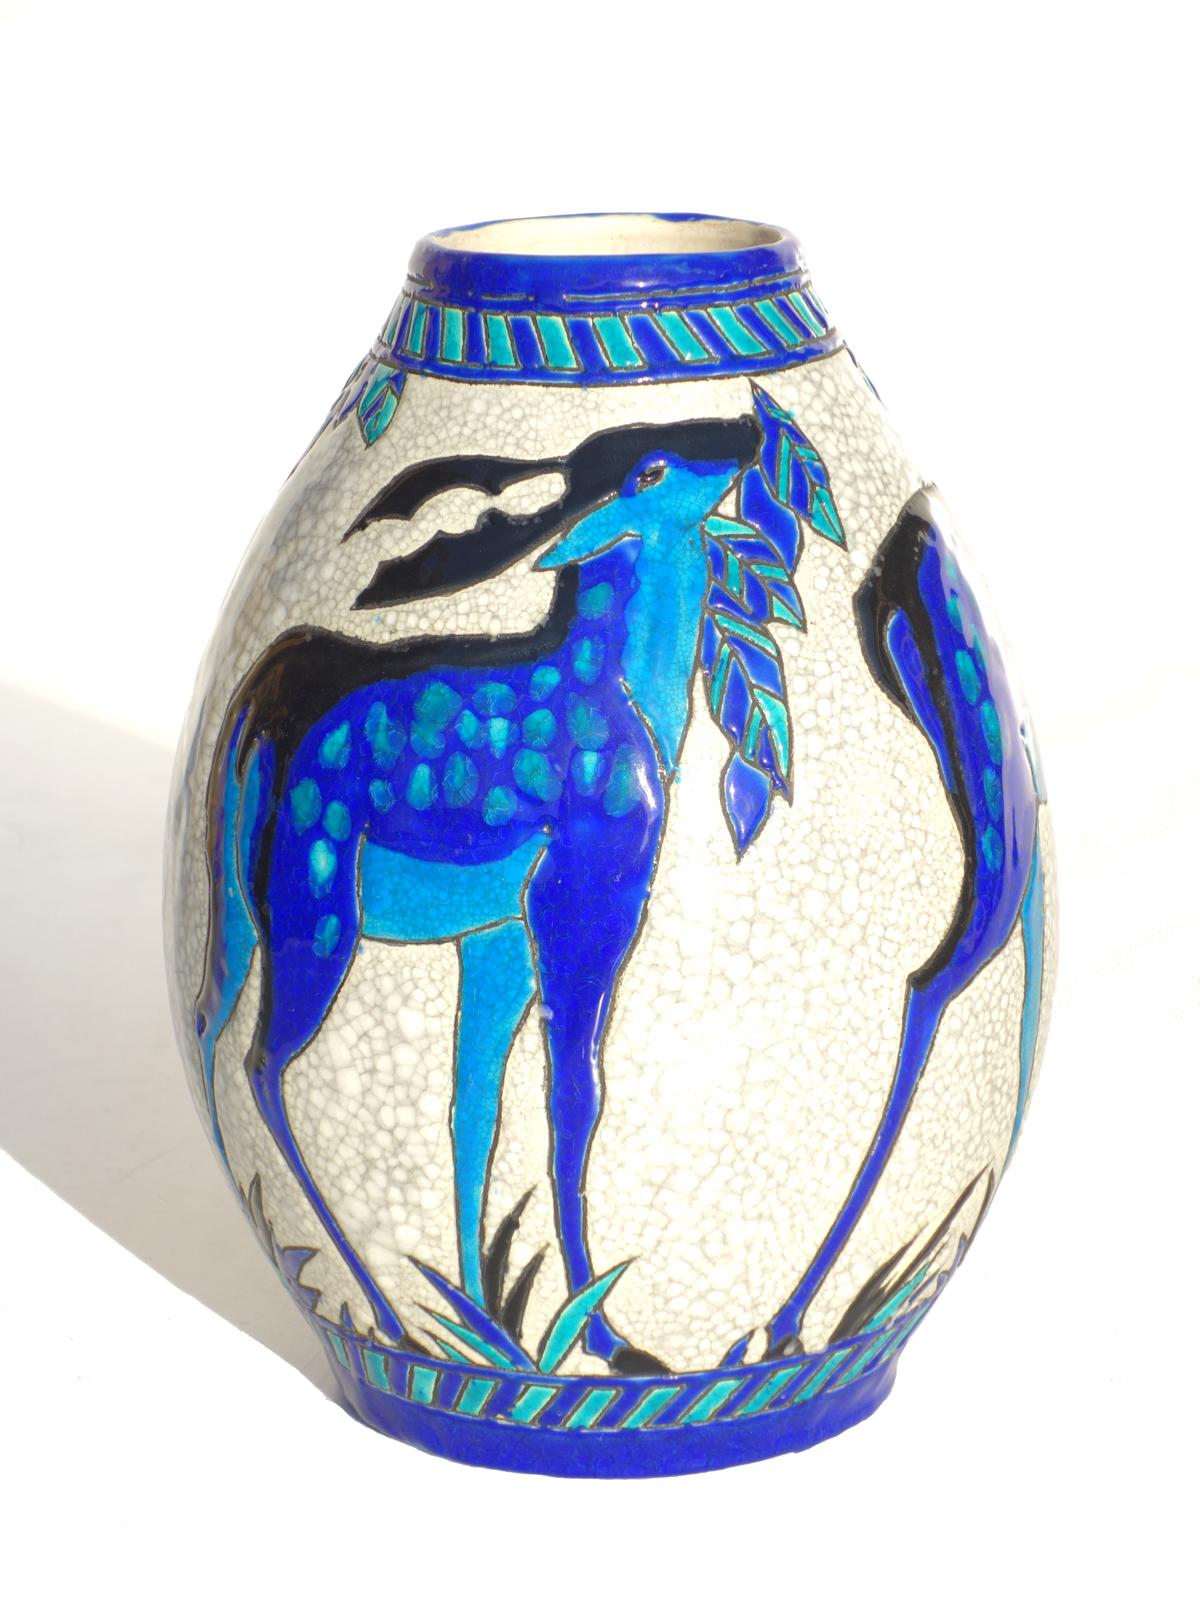 Fine Art Deco vase by Charles Catteau
Boch, La Louvier
Gres Keramis
Belgium, 1920 circa

Glazed ceramic with blue deer
Excellent condiction.
 